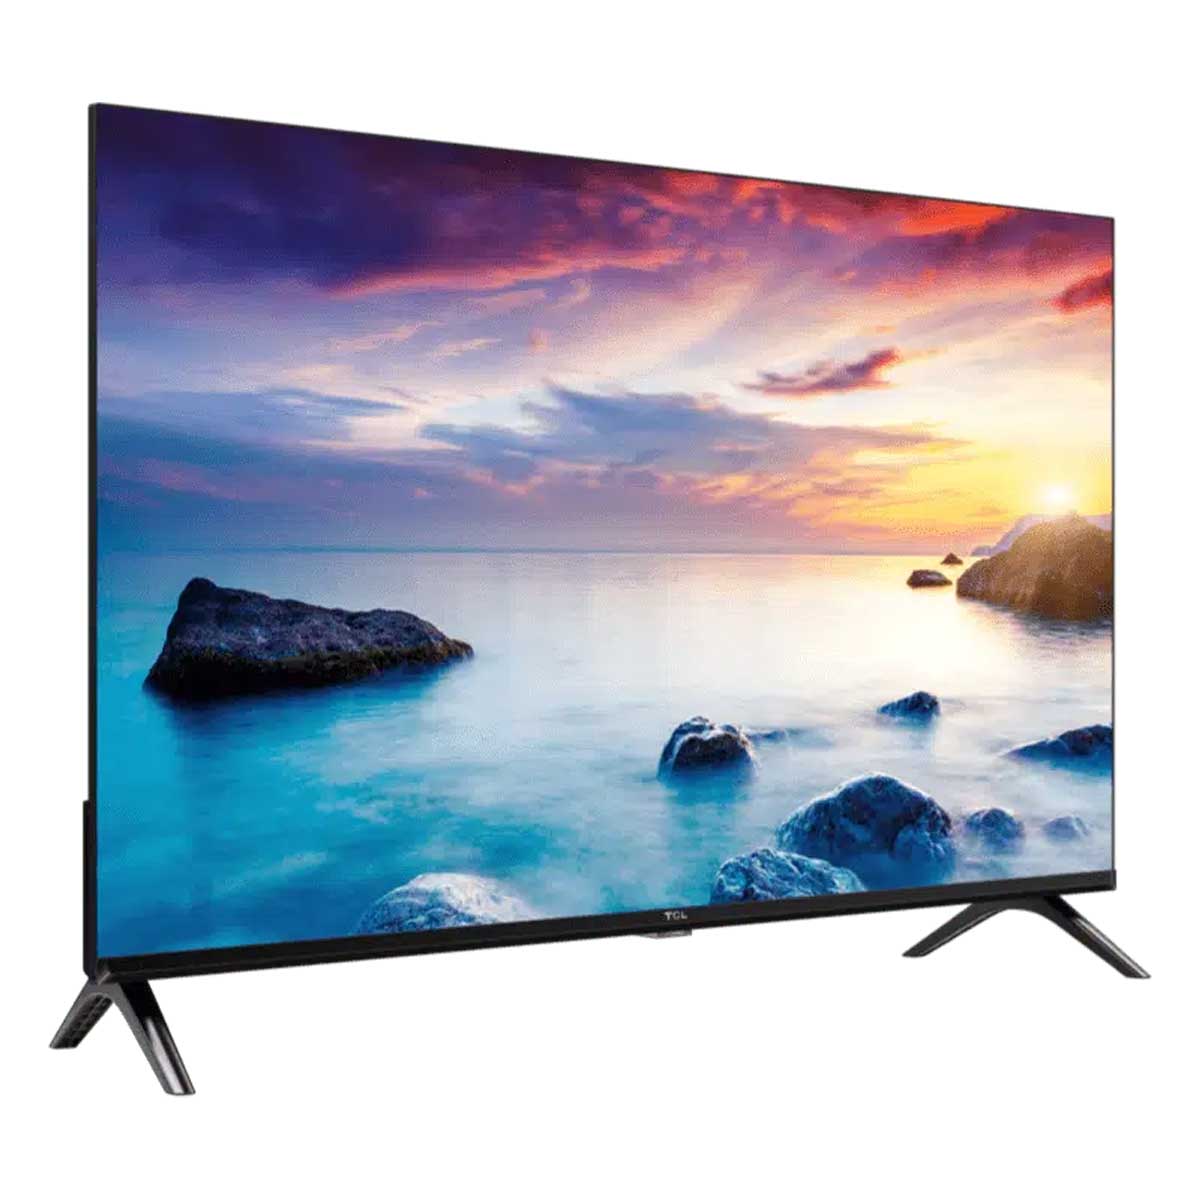 TCL 32S5400 32吋 FHD Google TV 全高清智能電視 - ShineCreation 創暉百貨